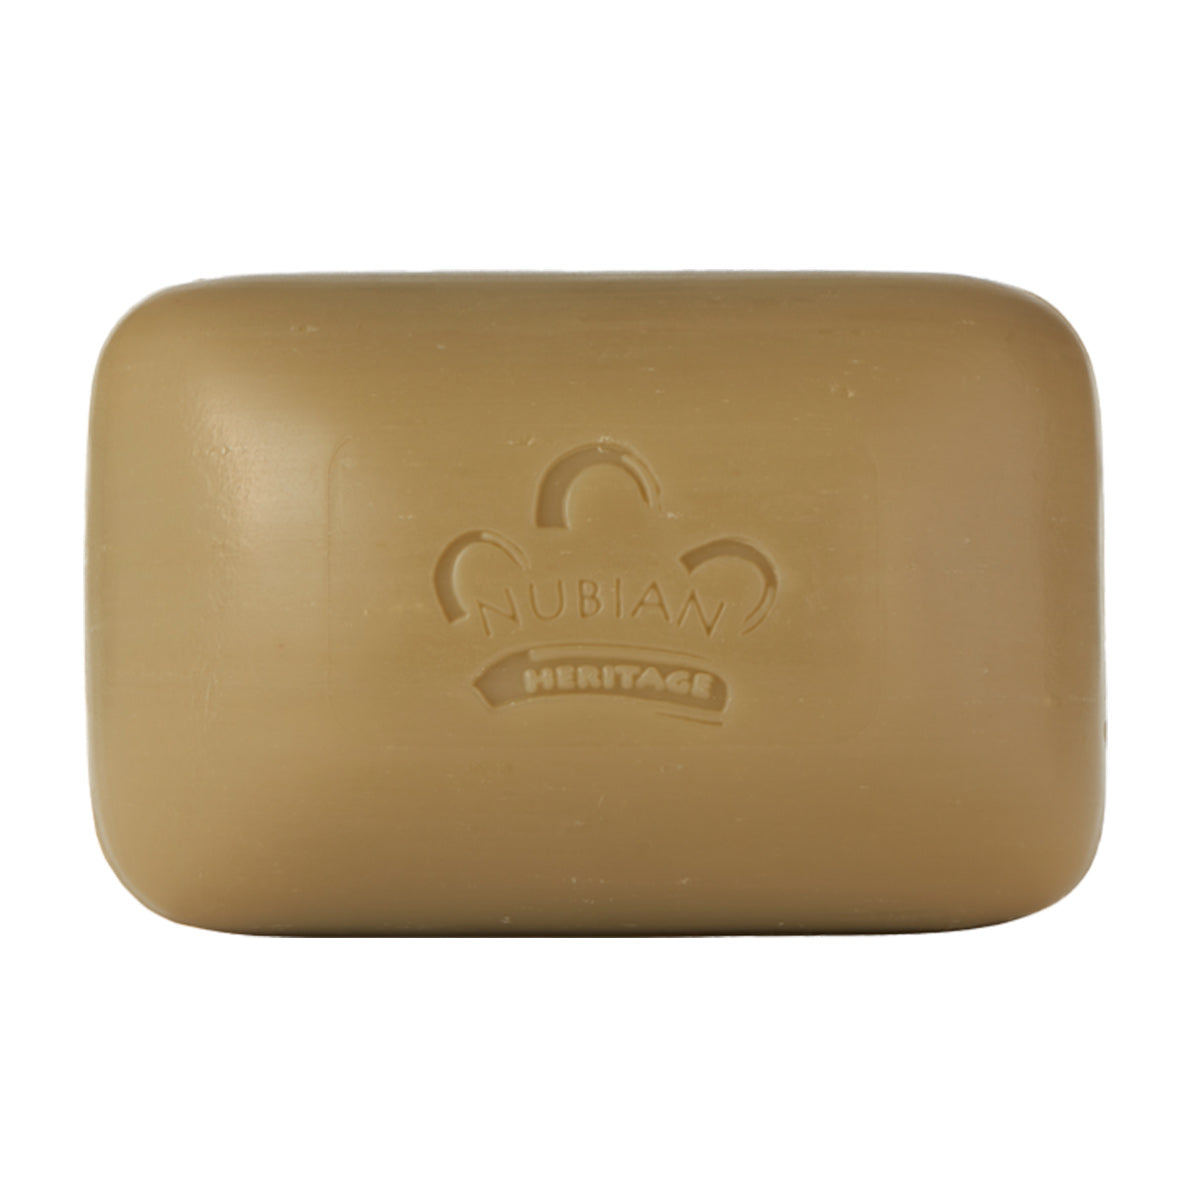 Alternate image of Raw Shea Butter Bar Soap